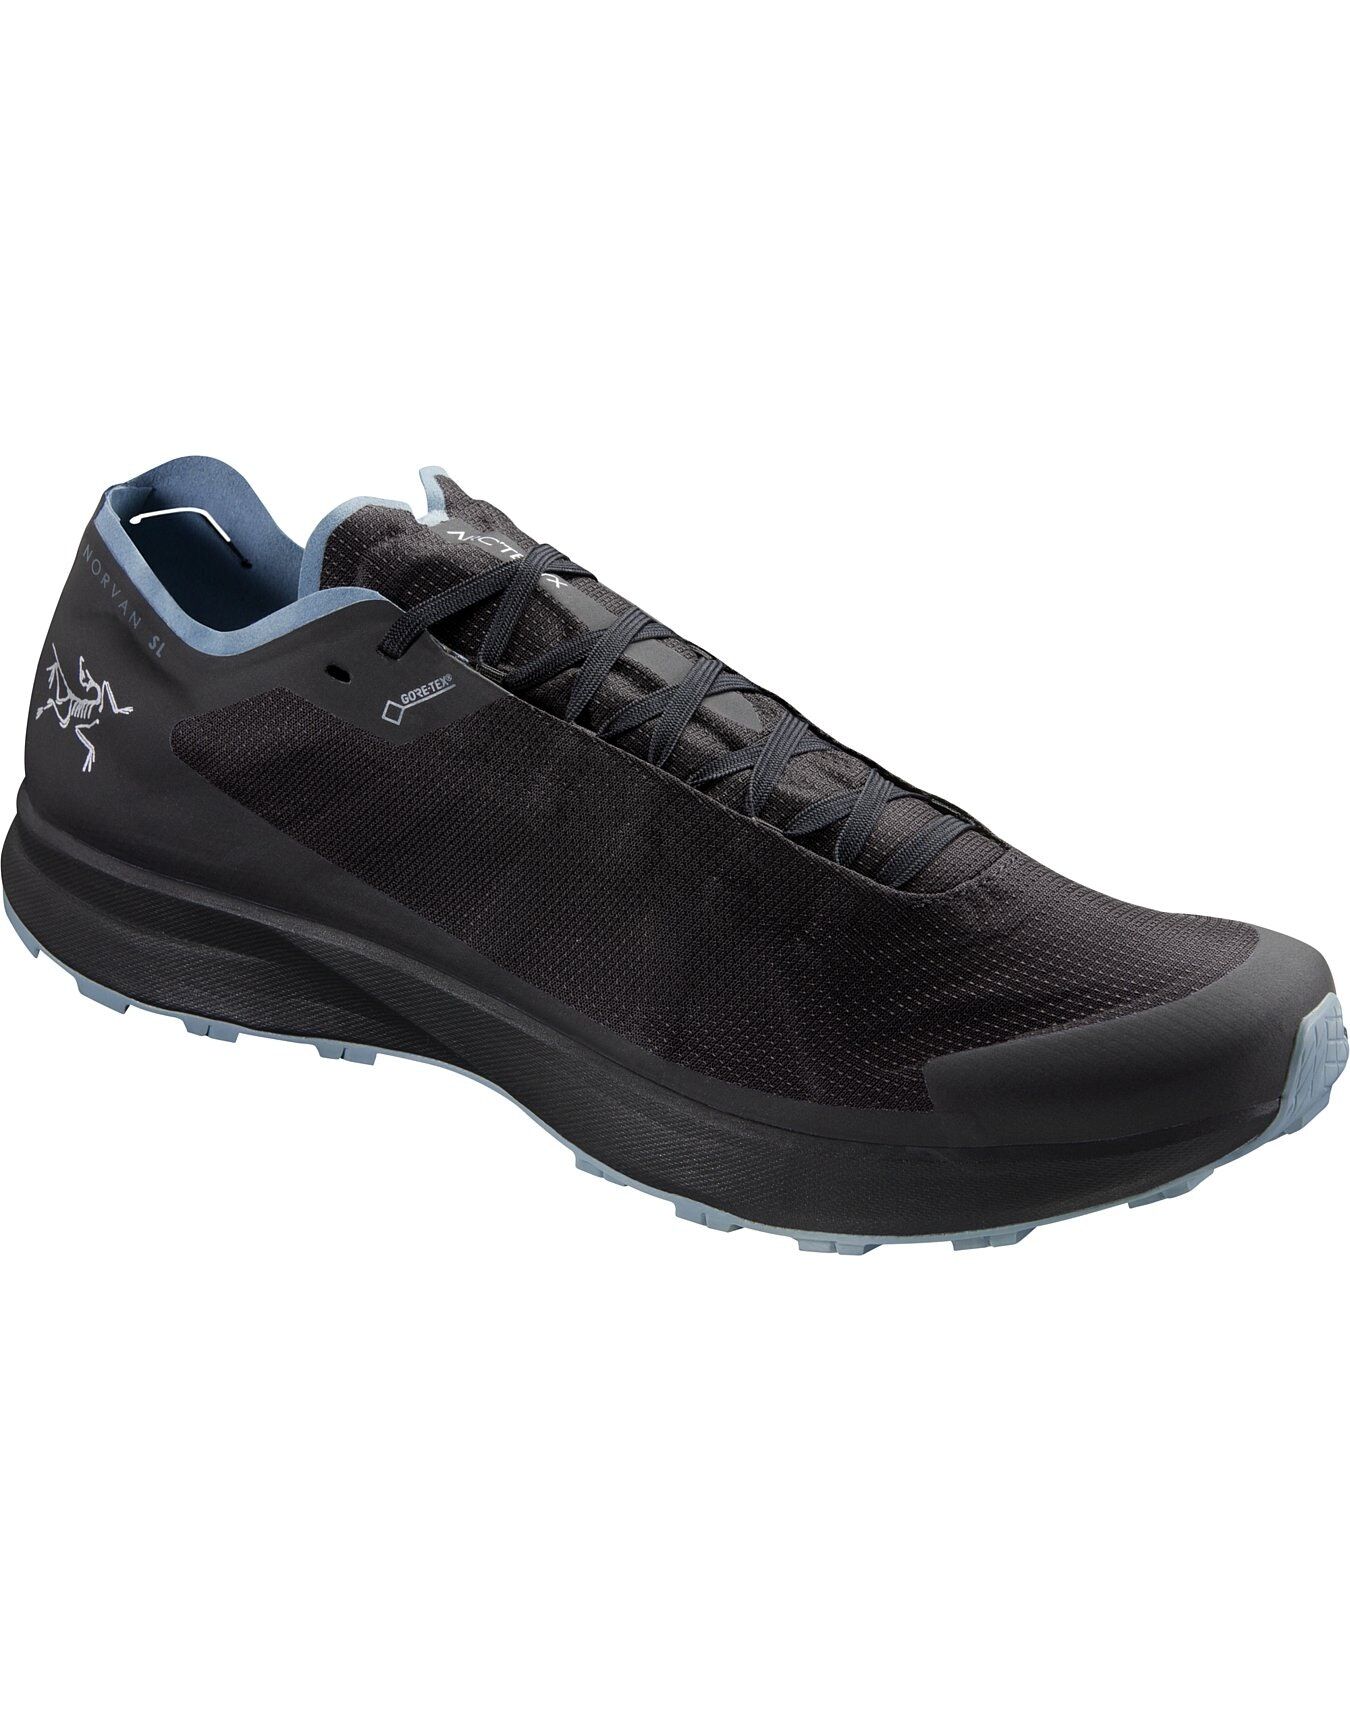 Arc'teryx NORVAN SL GTX - Trail running shoes - Men's